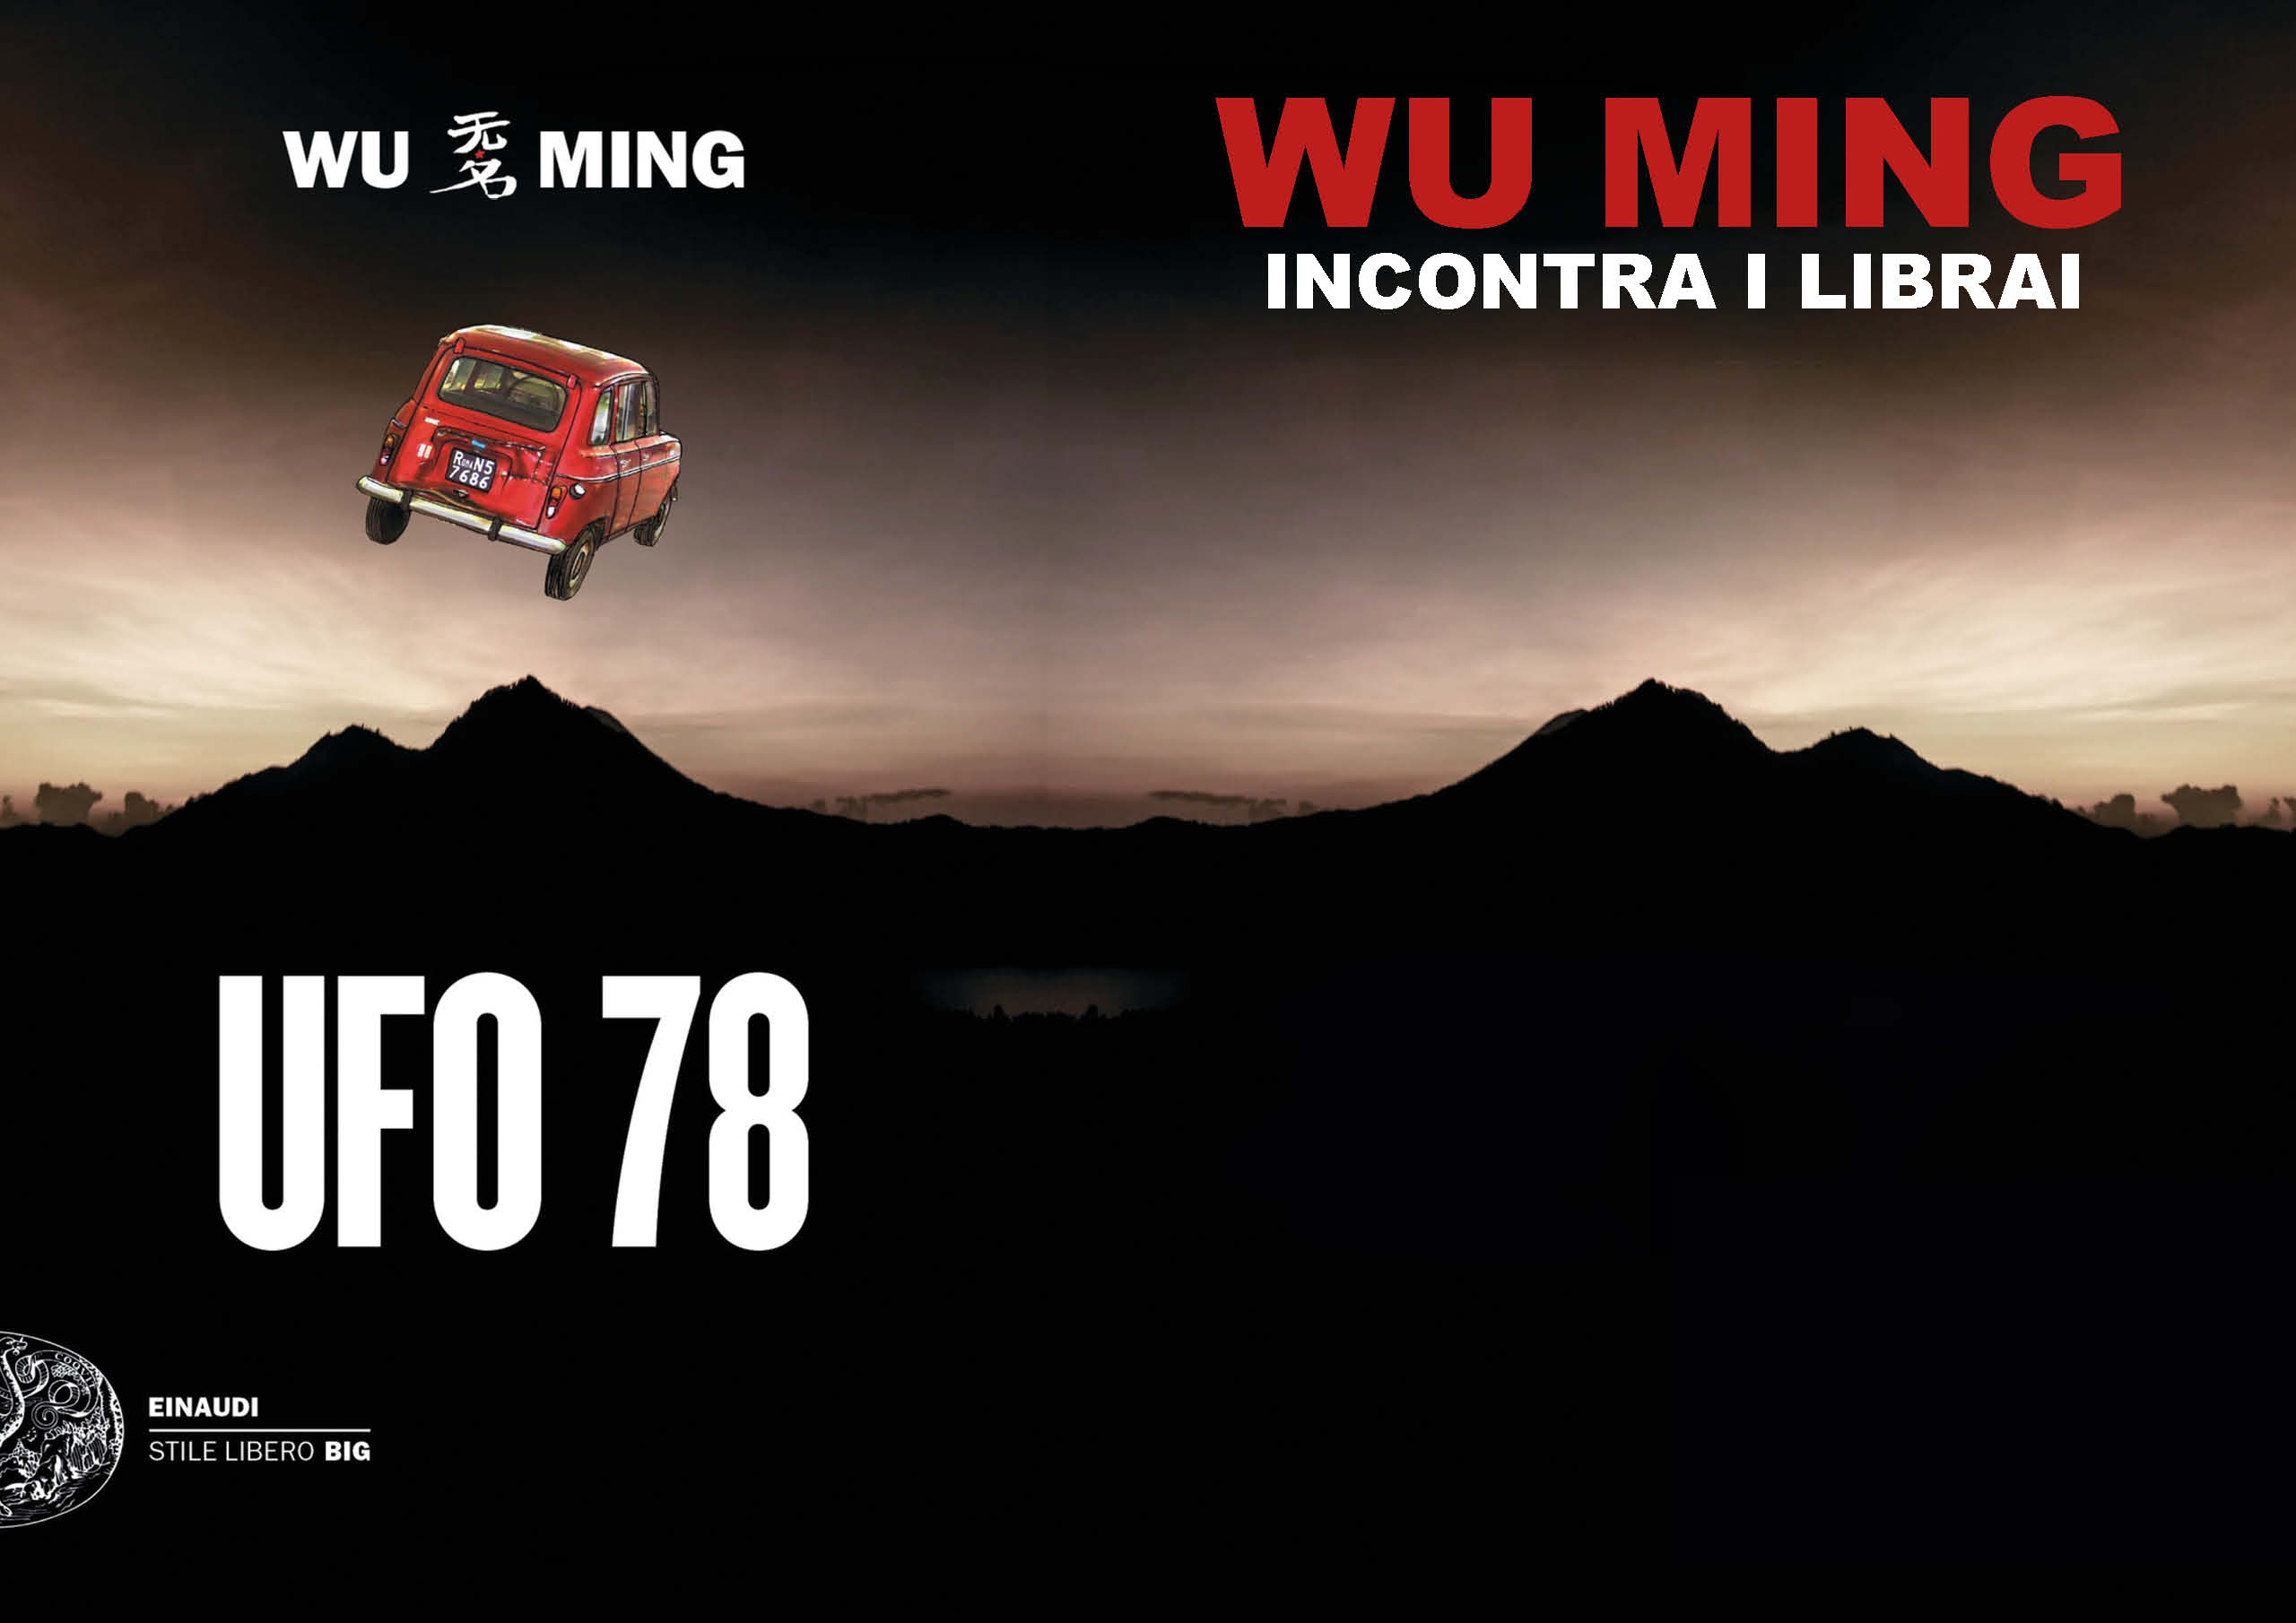 I Wu Ming incontrano i librai di Fastbook-Pde Libri Bologna